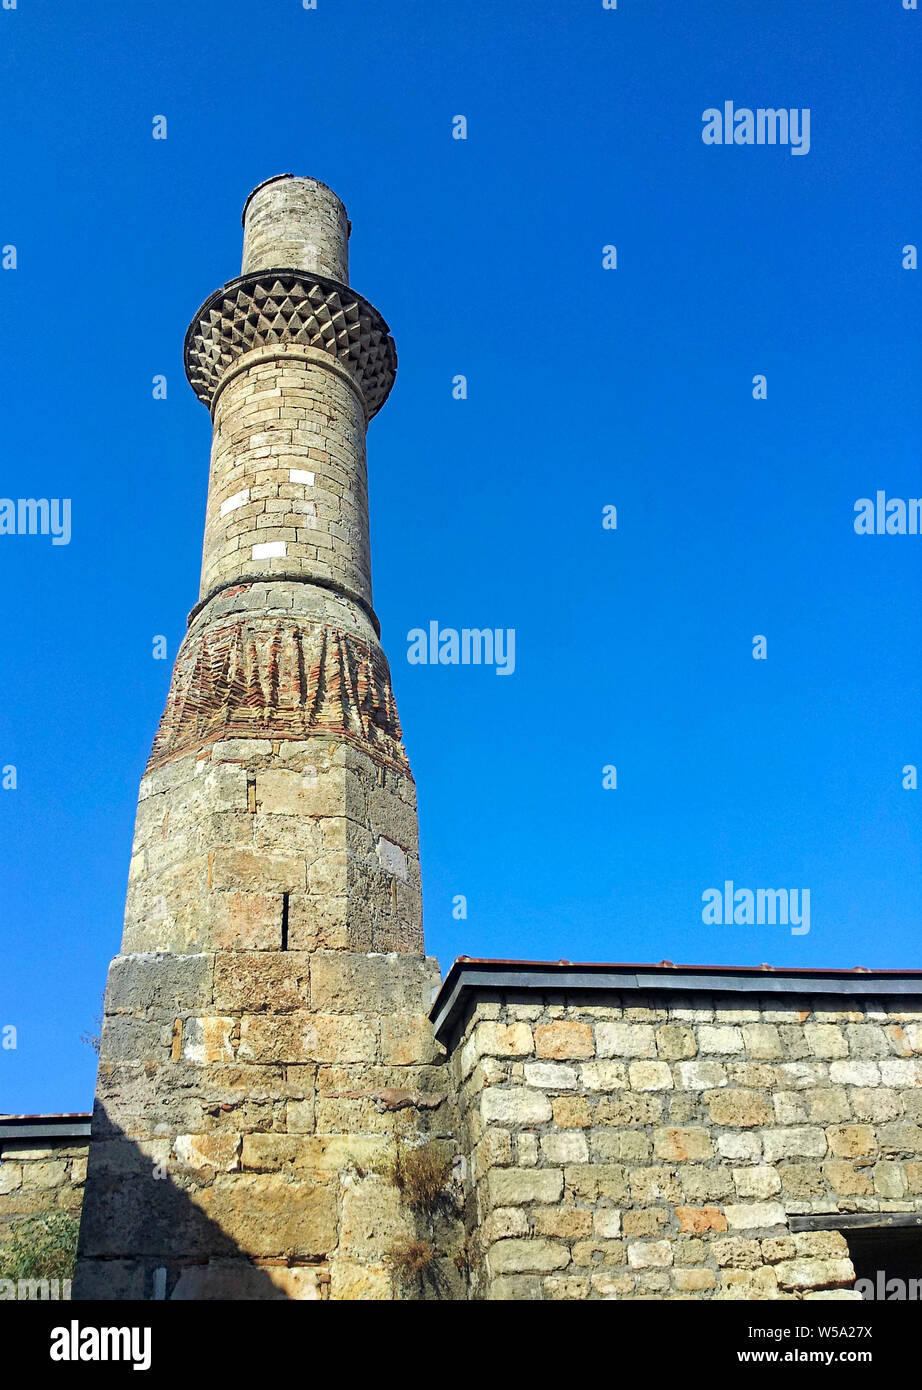 Broken Minaret Mosque or Kesik Minare Cami in Kaleici, located in Antalya, Turkey. Stock Photo